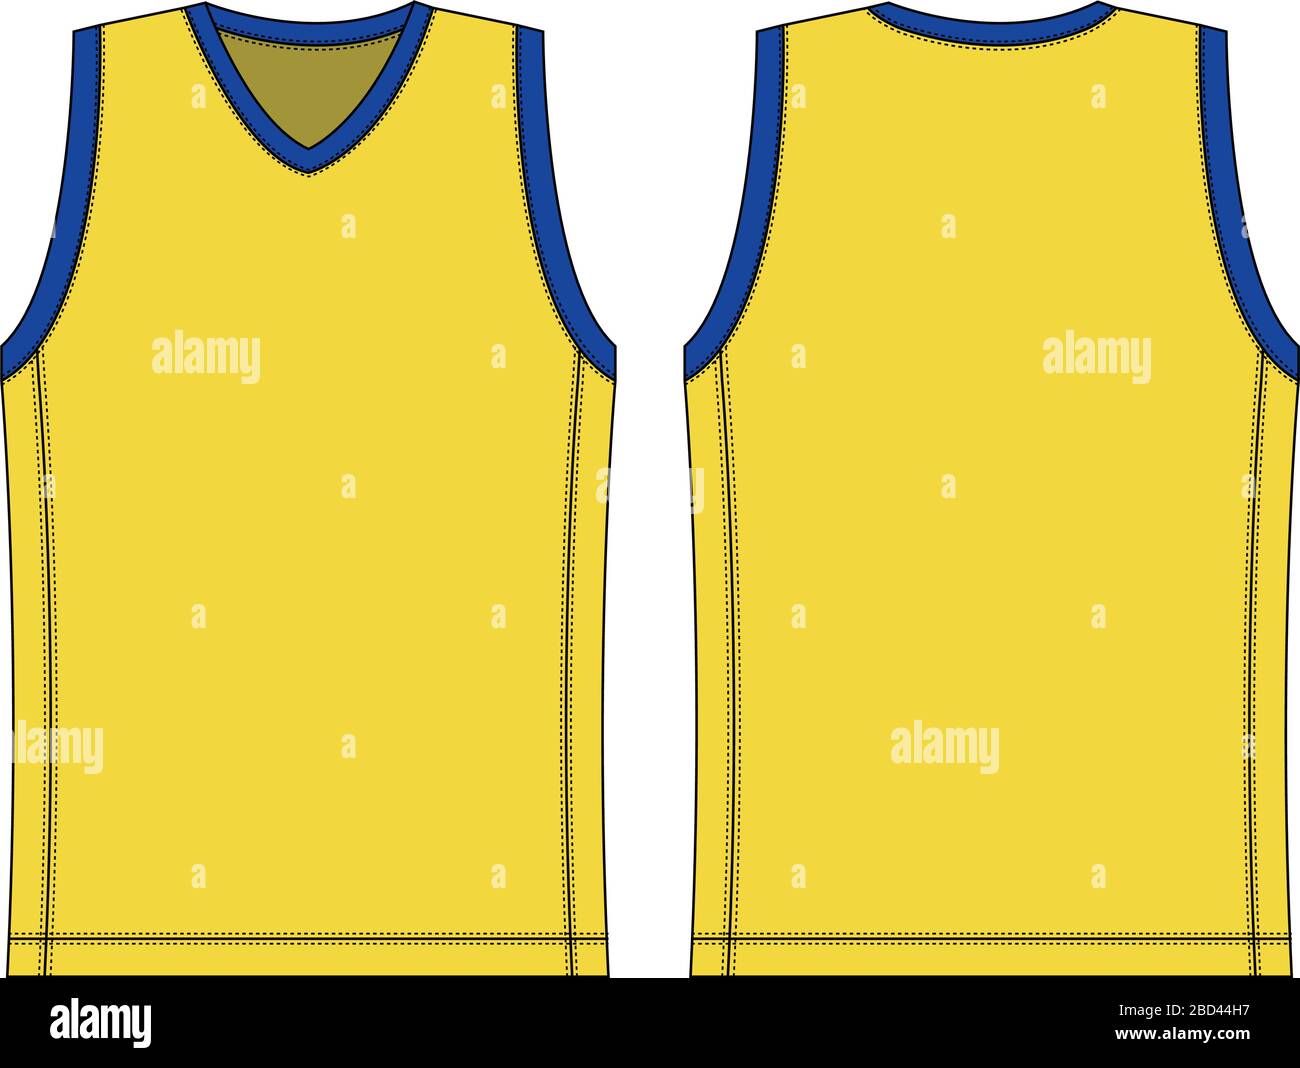 Download Tank Top Basketball Uniform Template Illustration Stock Vector Image Art Alamy